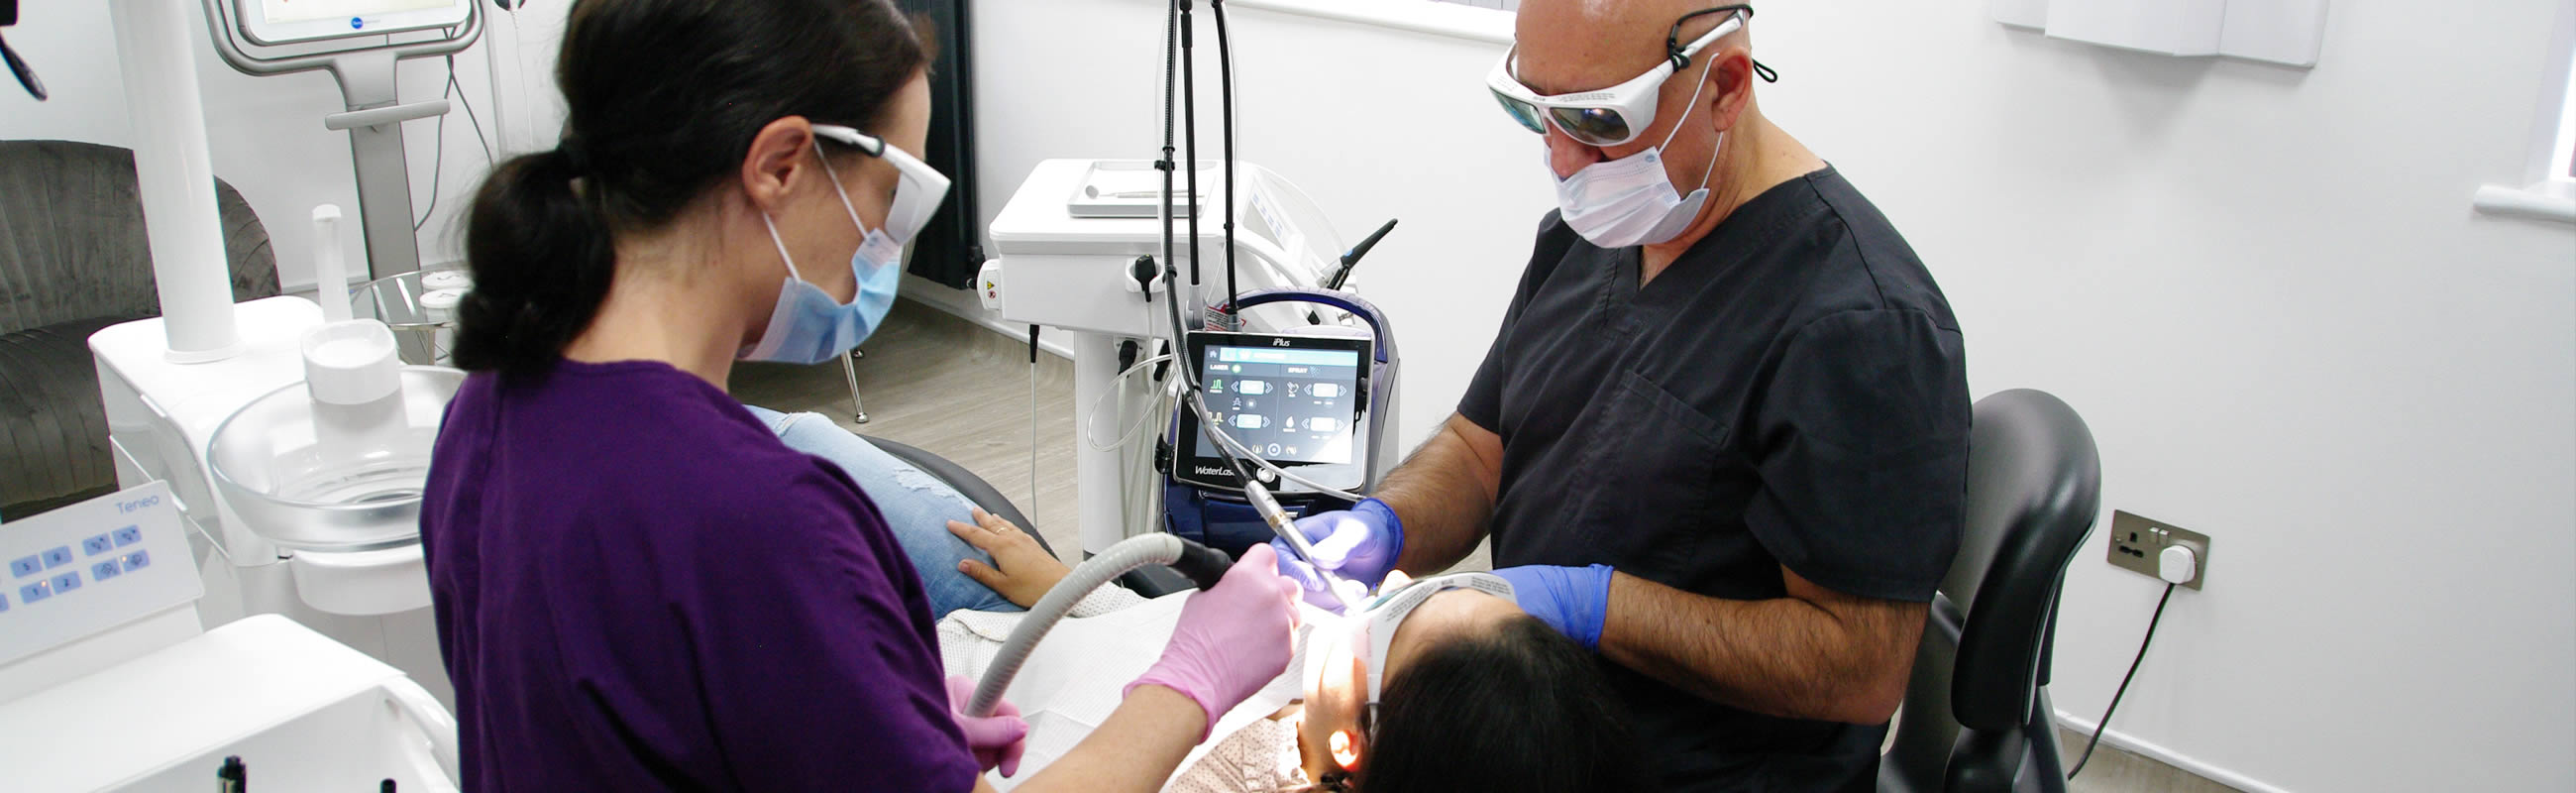 Welcome New Patients at Harrow Dental Practice